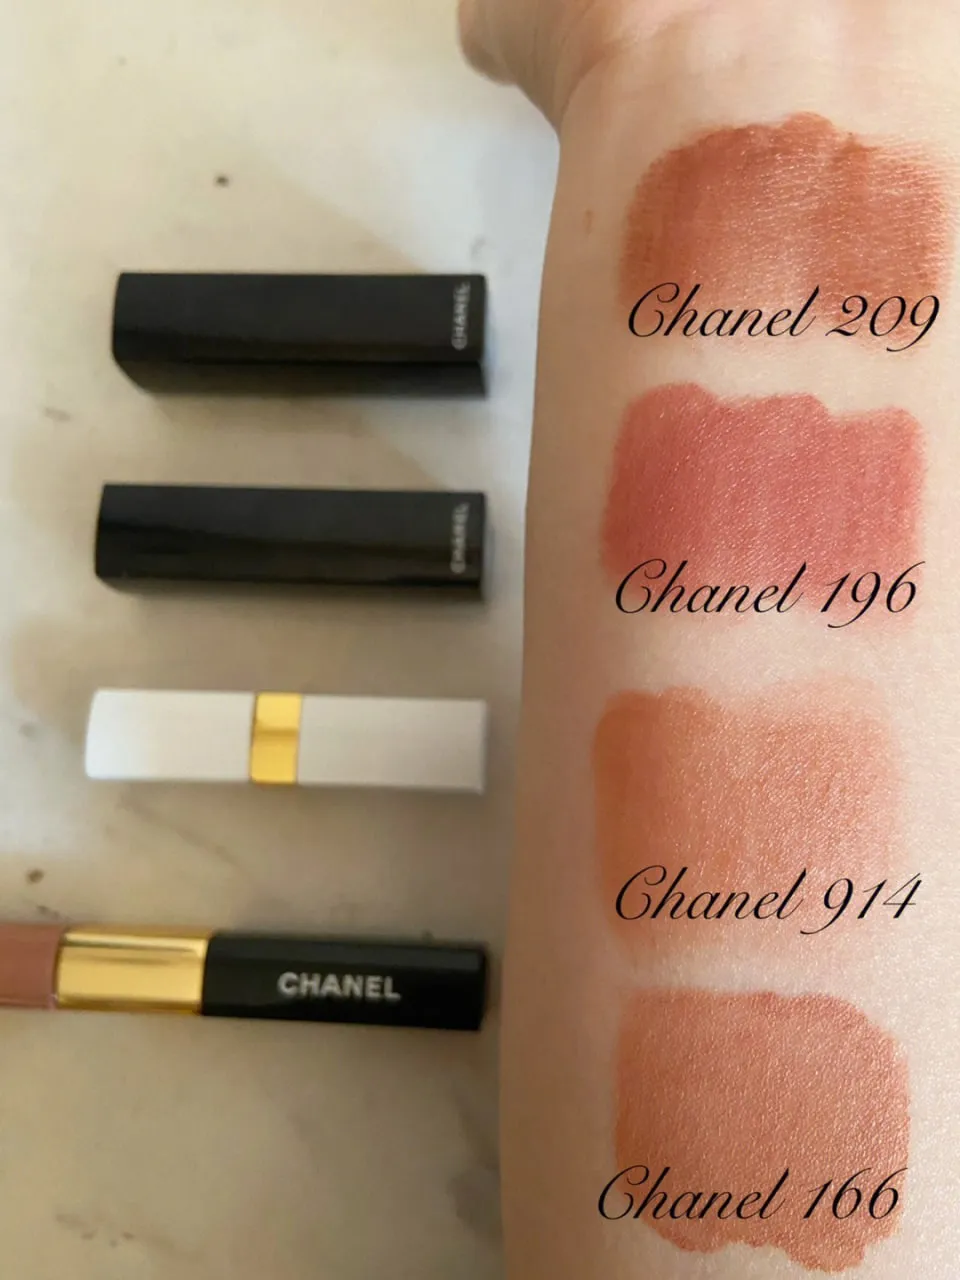 chanel 209 lipstick